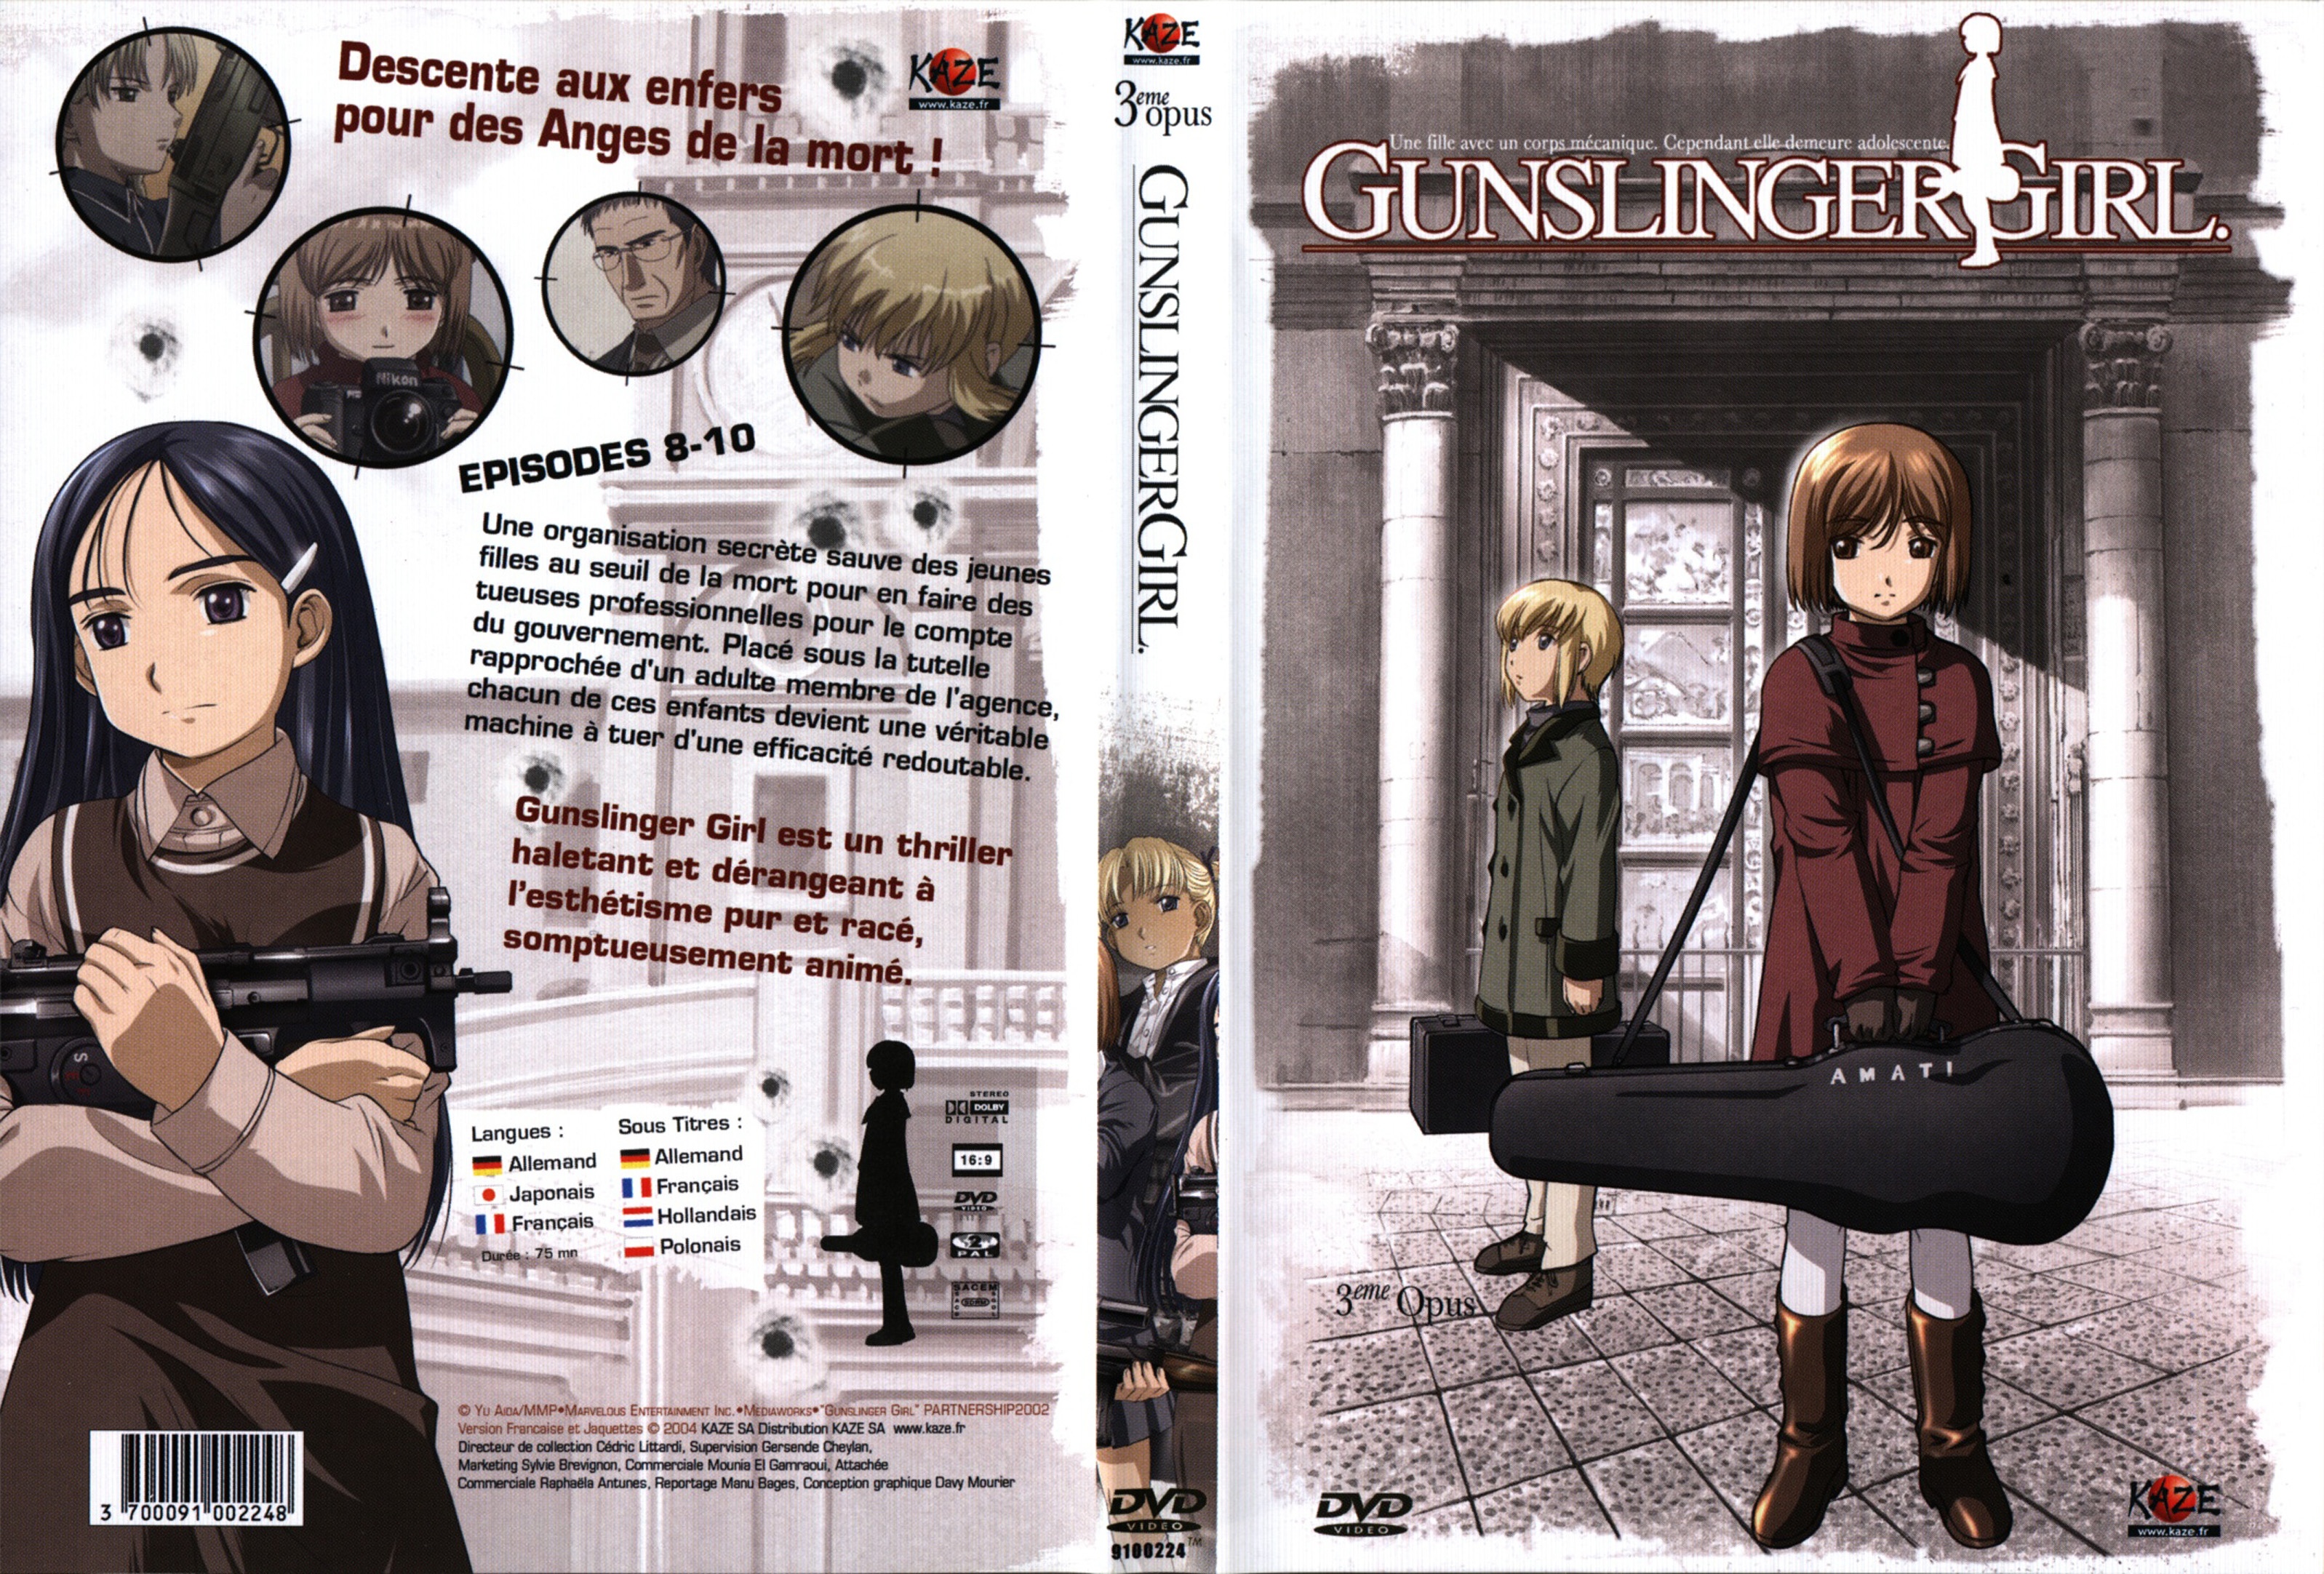 Jaquette DVD Gunslinger Girl vol 03